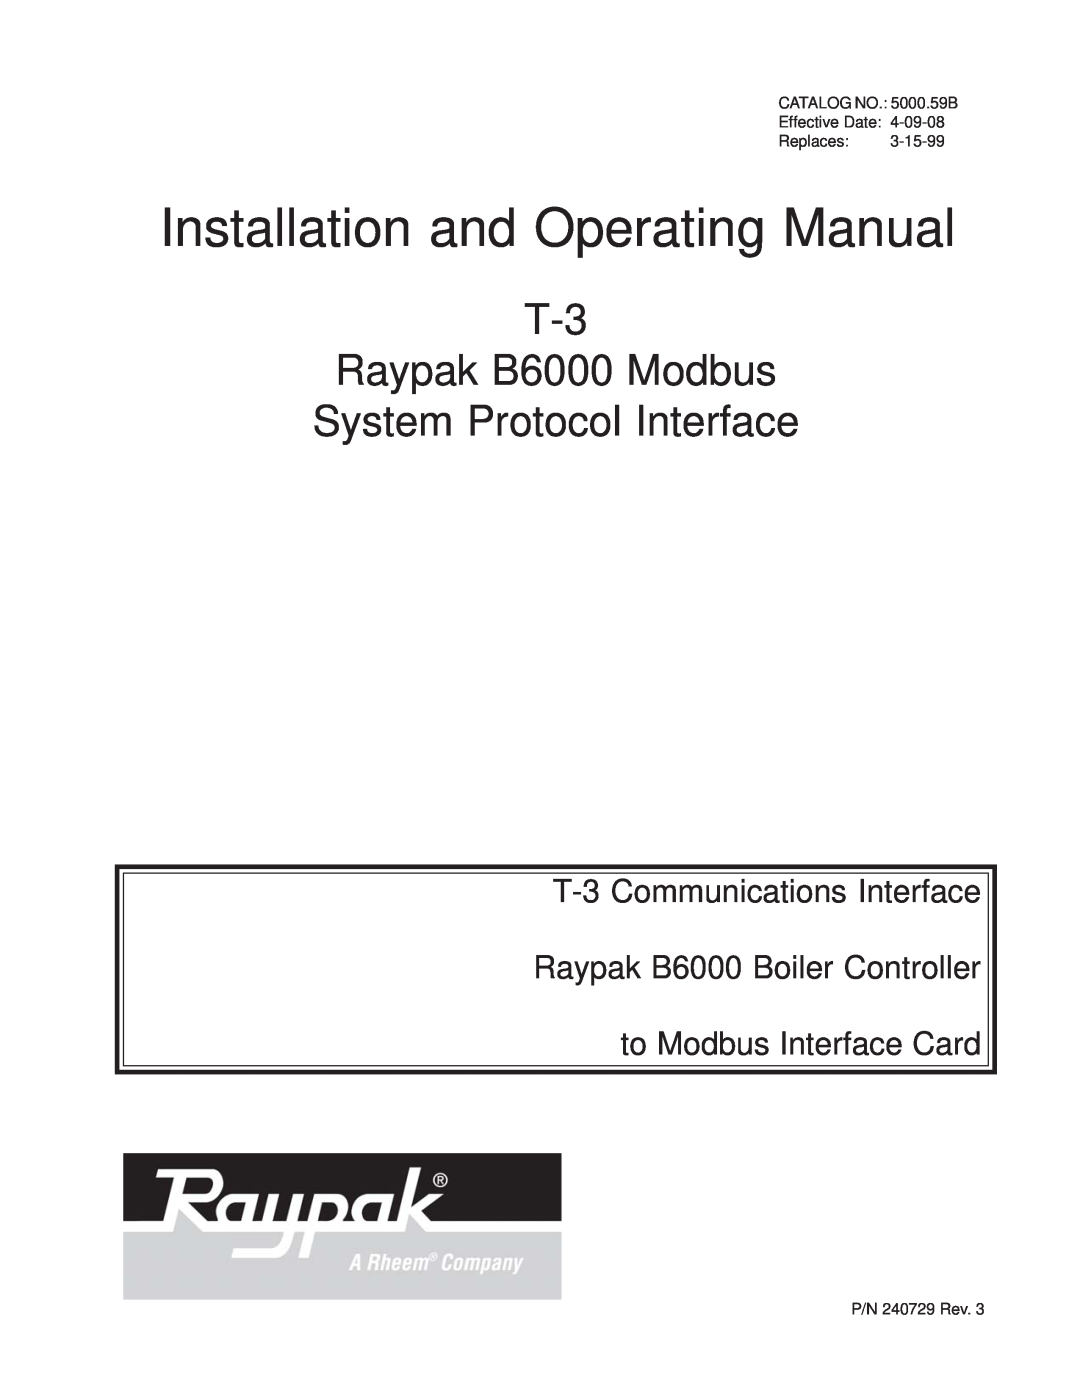 Raypak manual Installation and Operating Manual, T-3 Raypak B6000 Modbus System Protocol Interface 